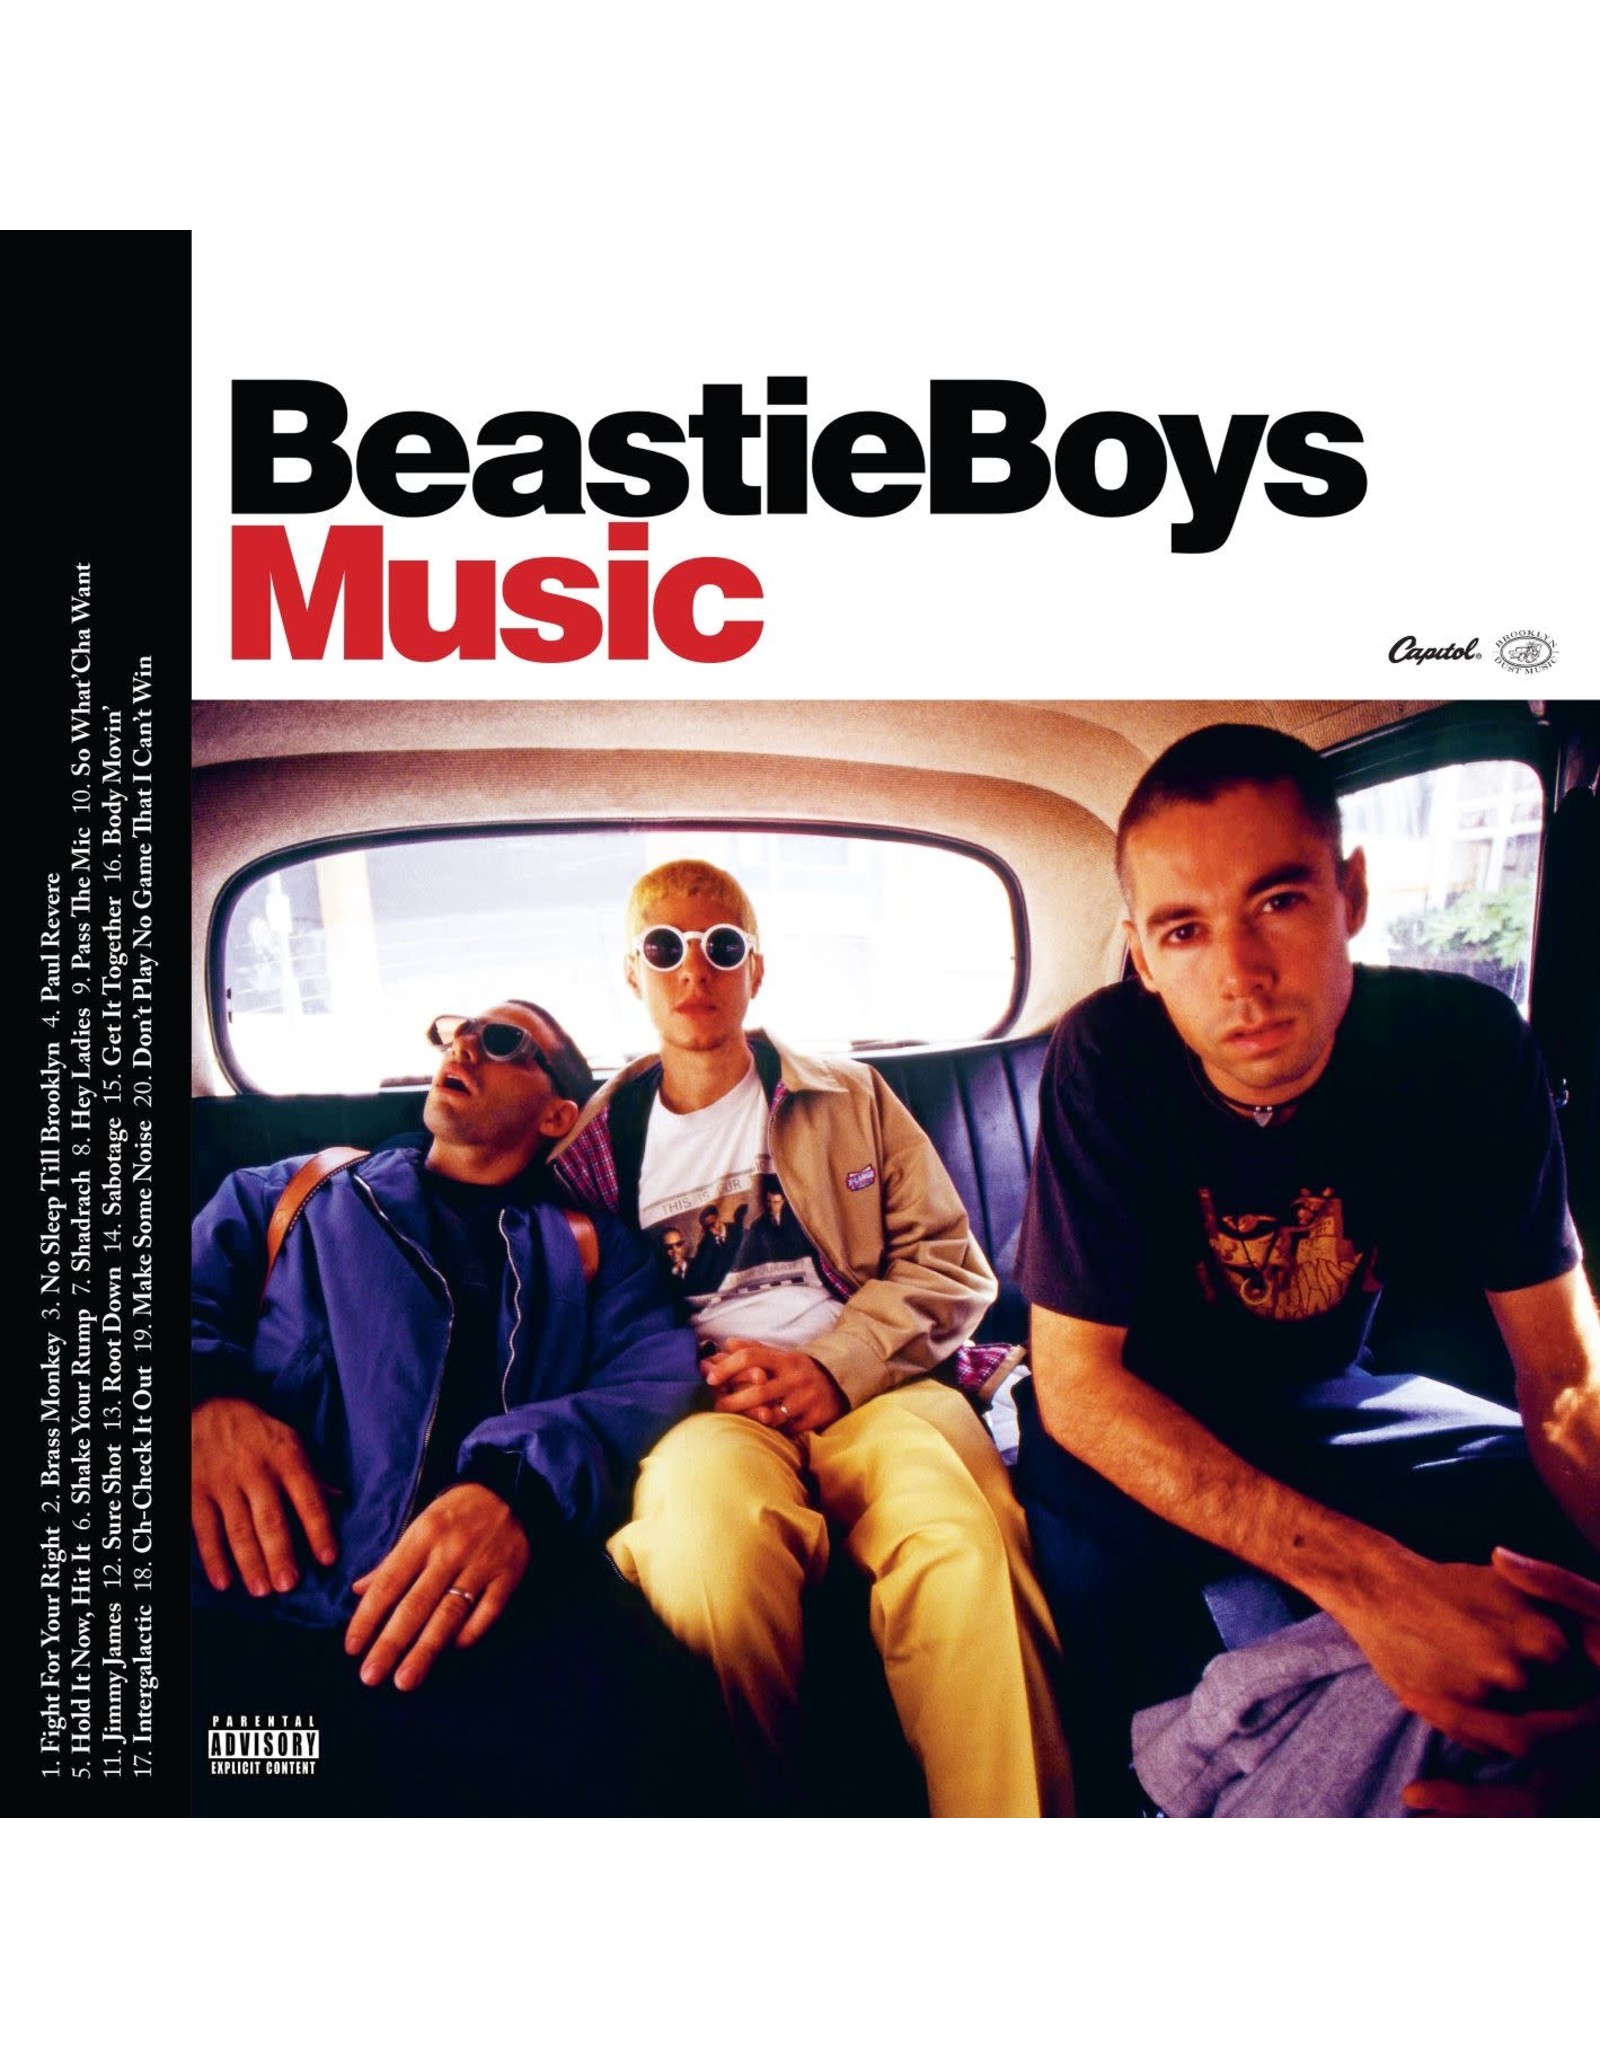 Beastie Boys - Beastie Boys Music 2LP